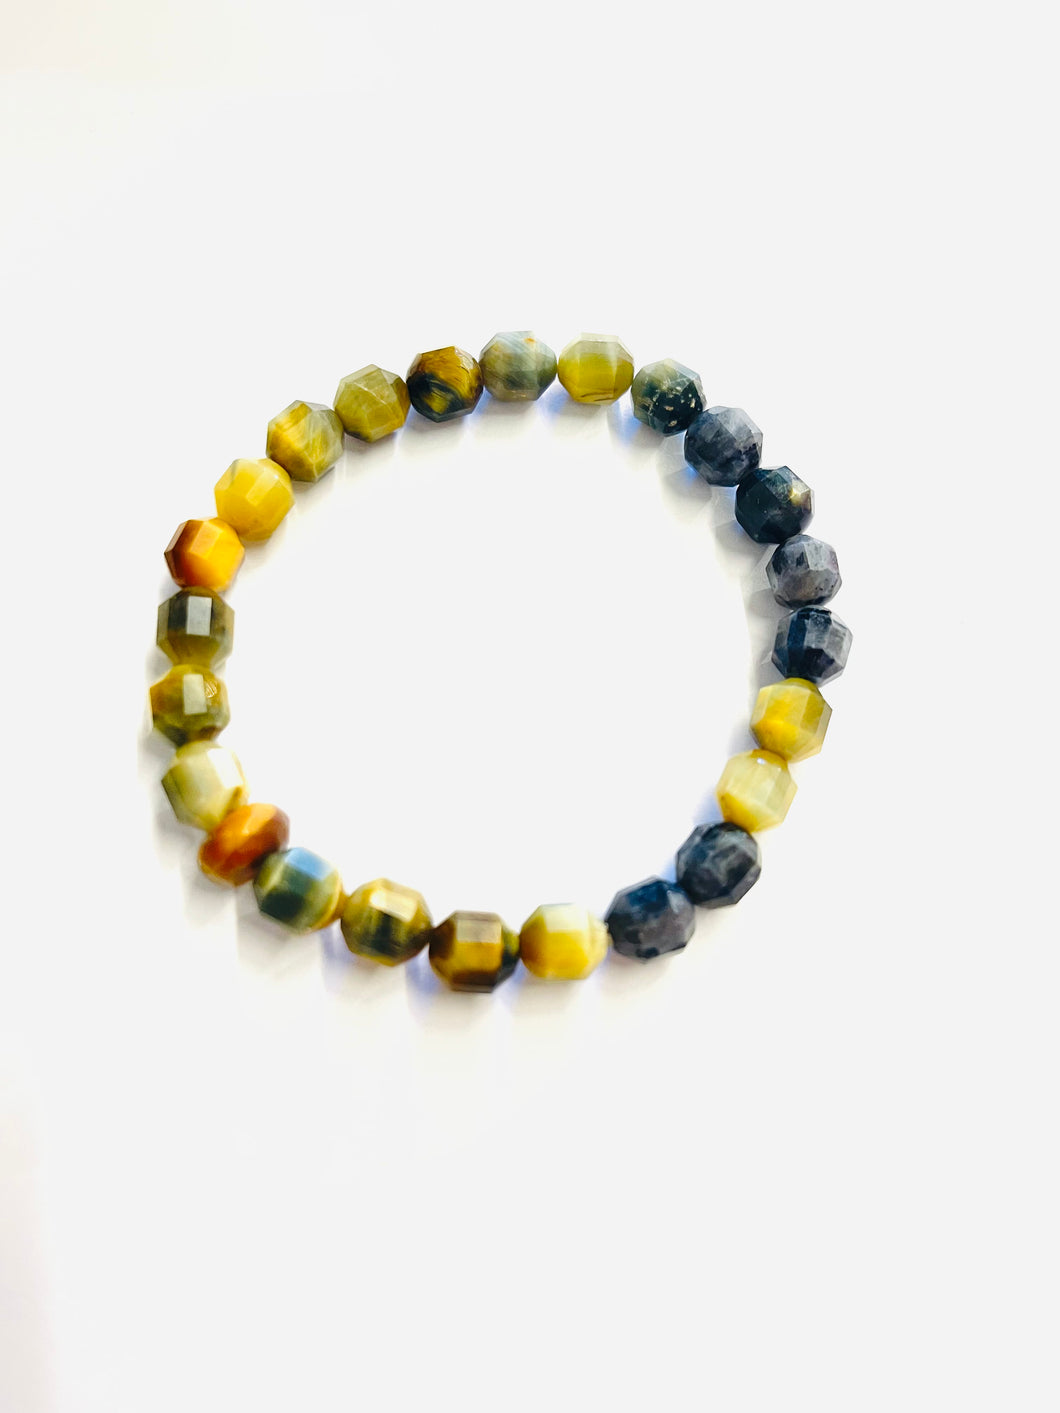 Bracelet with tiger’s eye beads